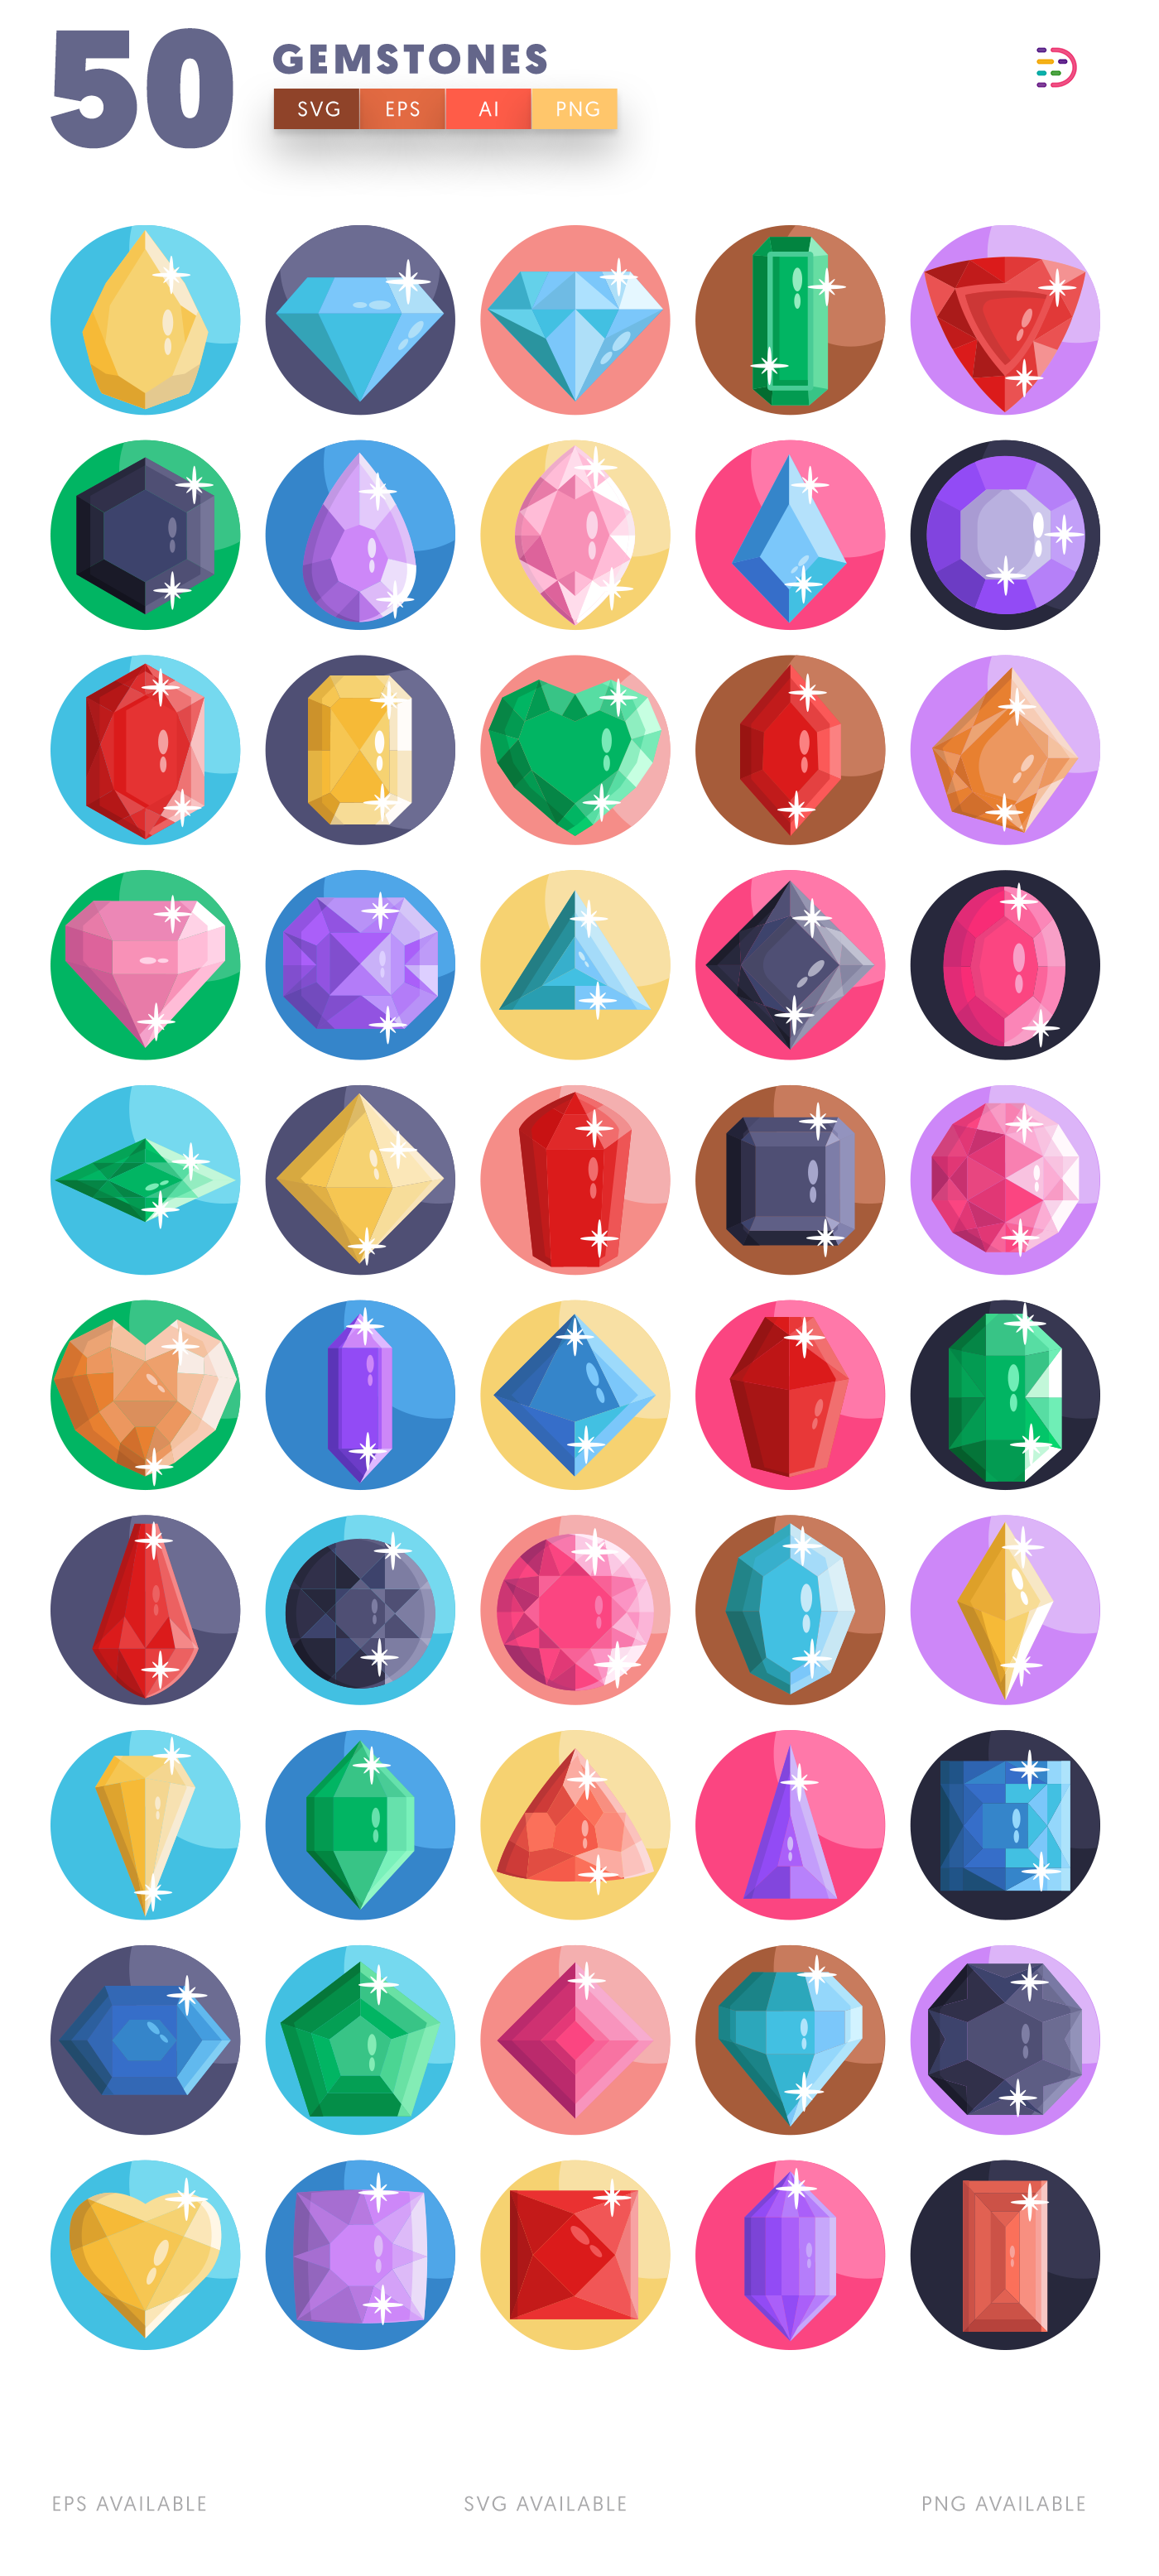 Gemstones icon pack